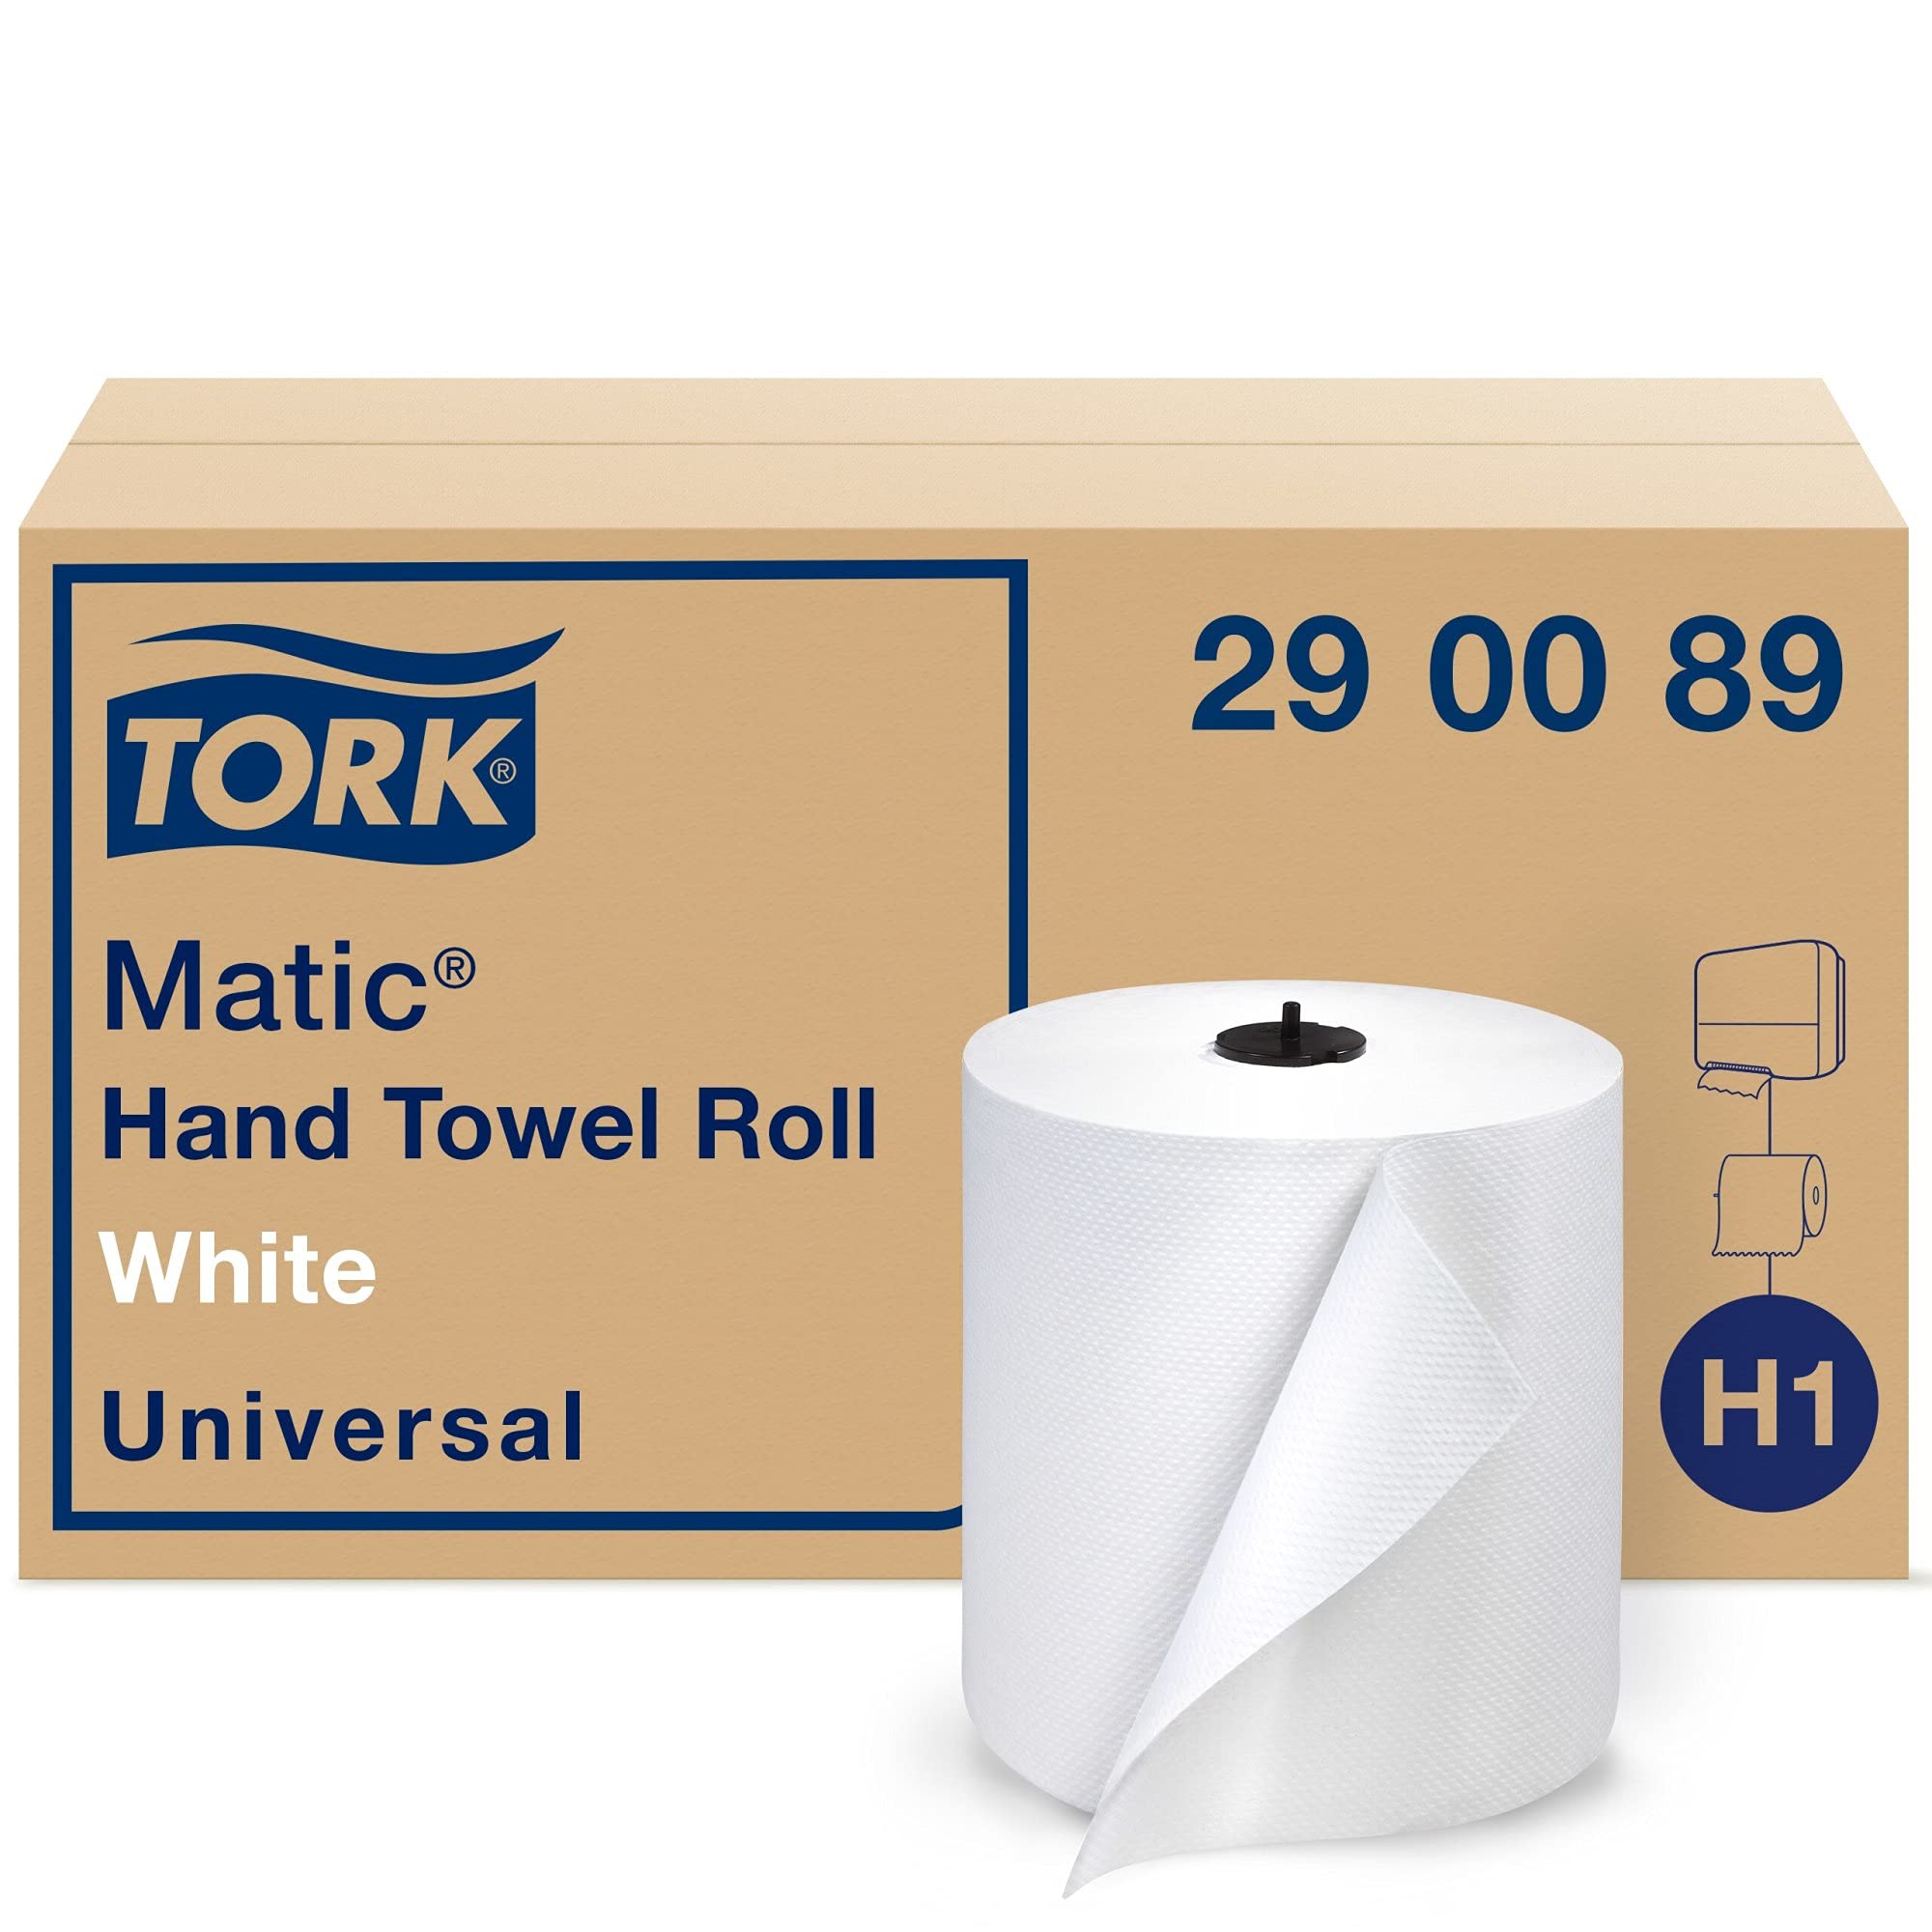 Tork Matic Paper ハンドタオルロール ホワイト H1、ユニバーサル、100% 再生繊維、6 ロ...